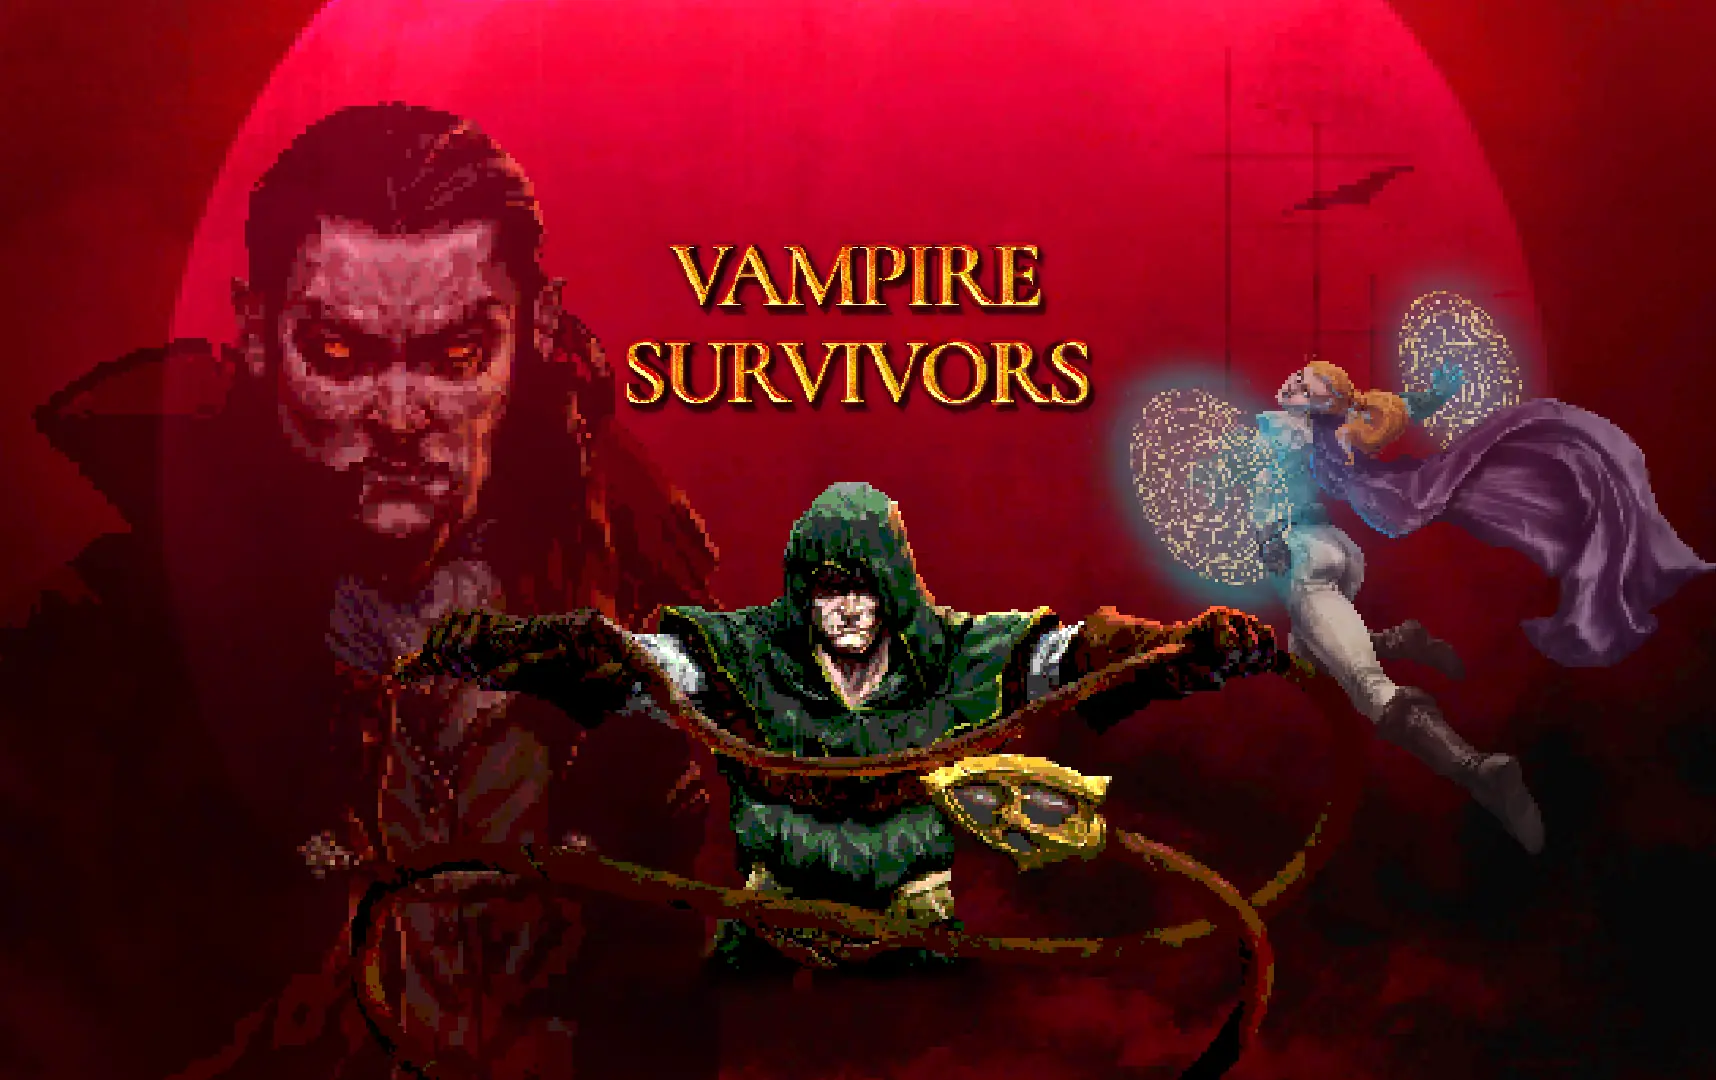 Vampire survivors title screen